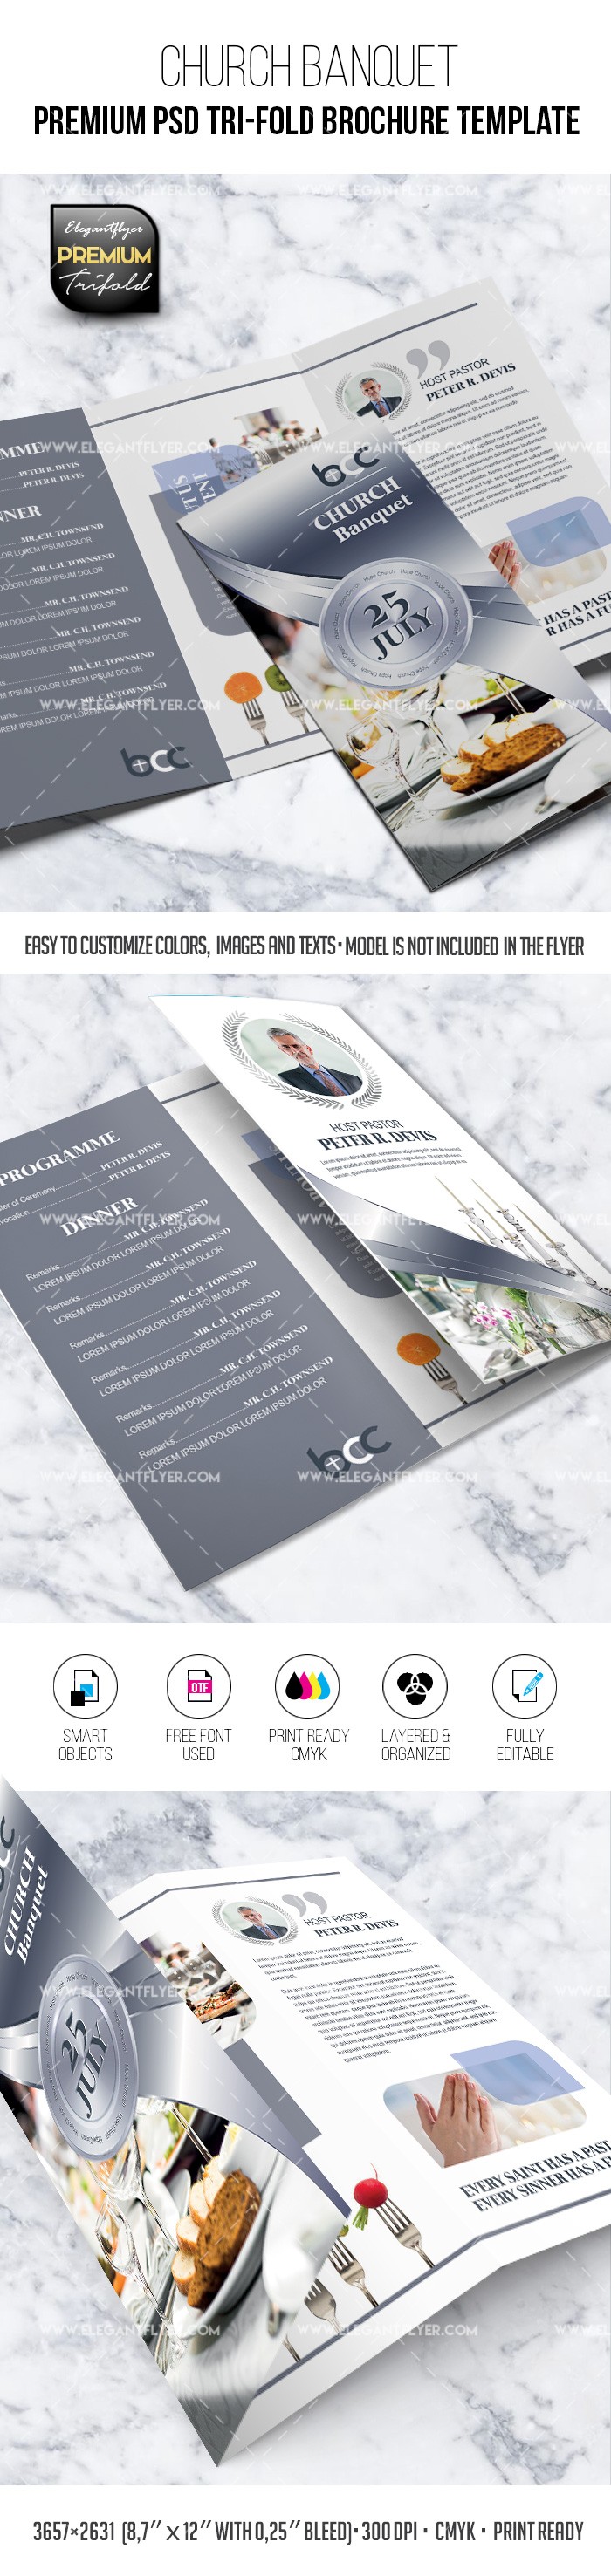 Banquete da Igreja - Modelo Premium de Brochura Tri-Fold em PSD by ElegantFlyer